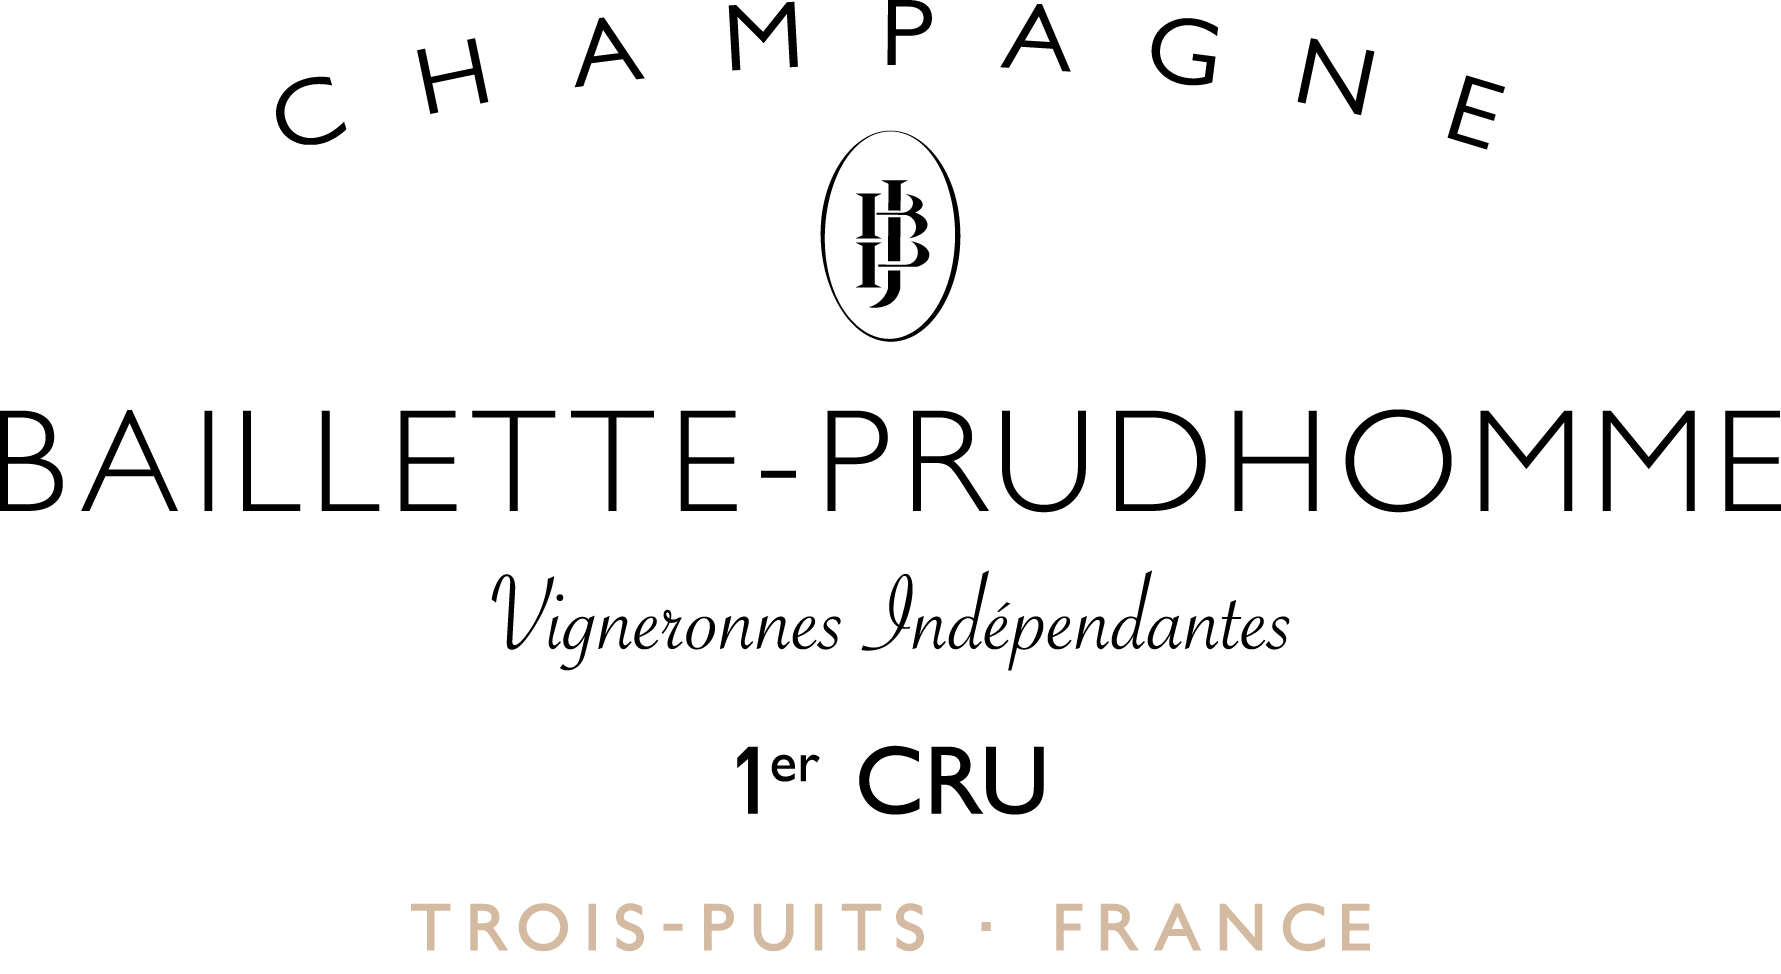 Champagne Jean Baillette-Prudhomme